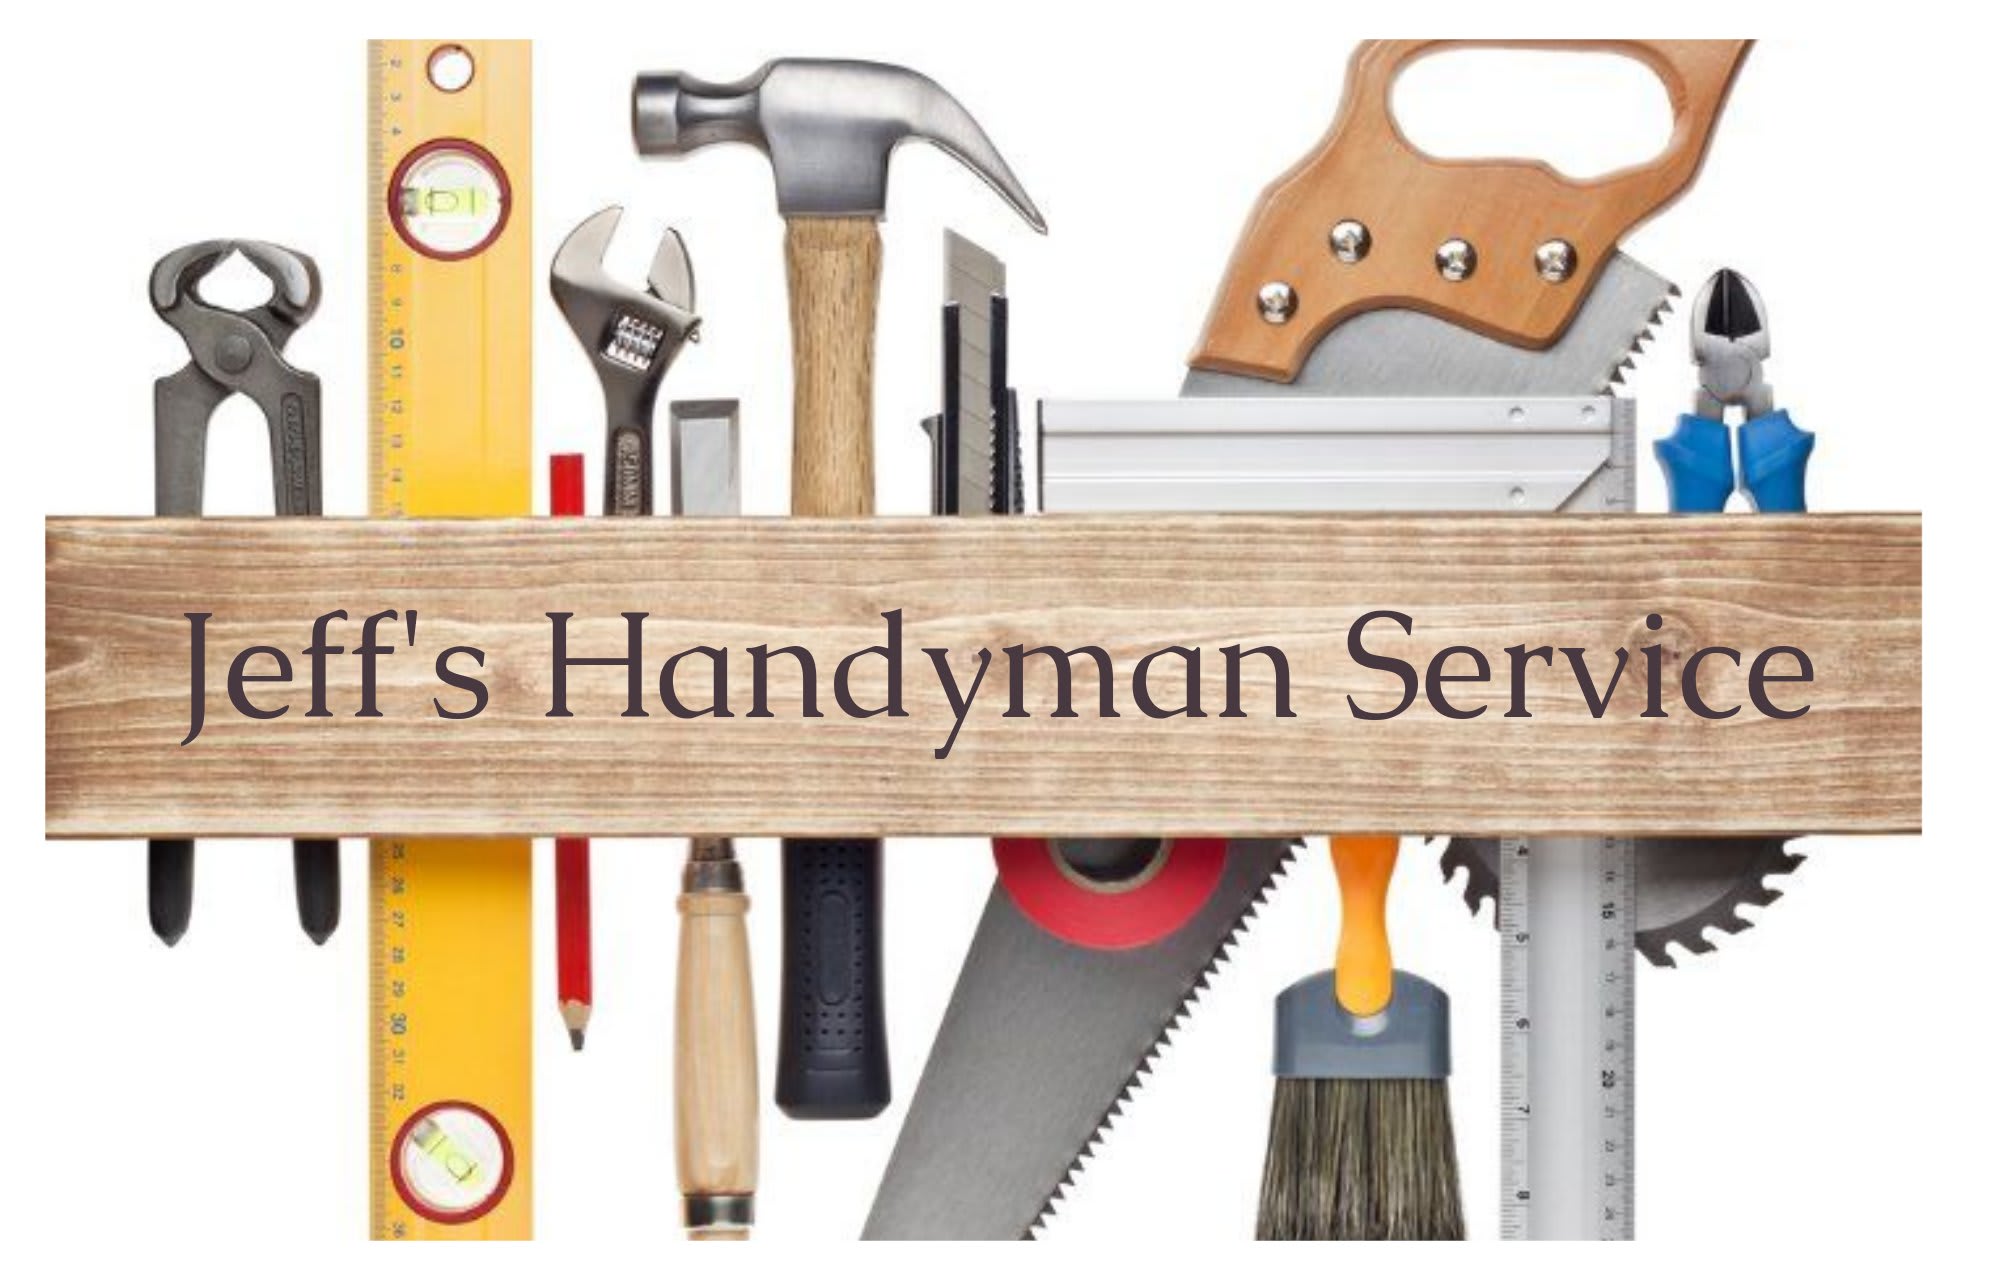 Jeff's handyman service